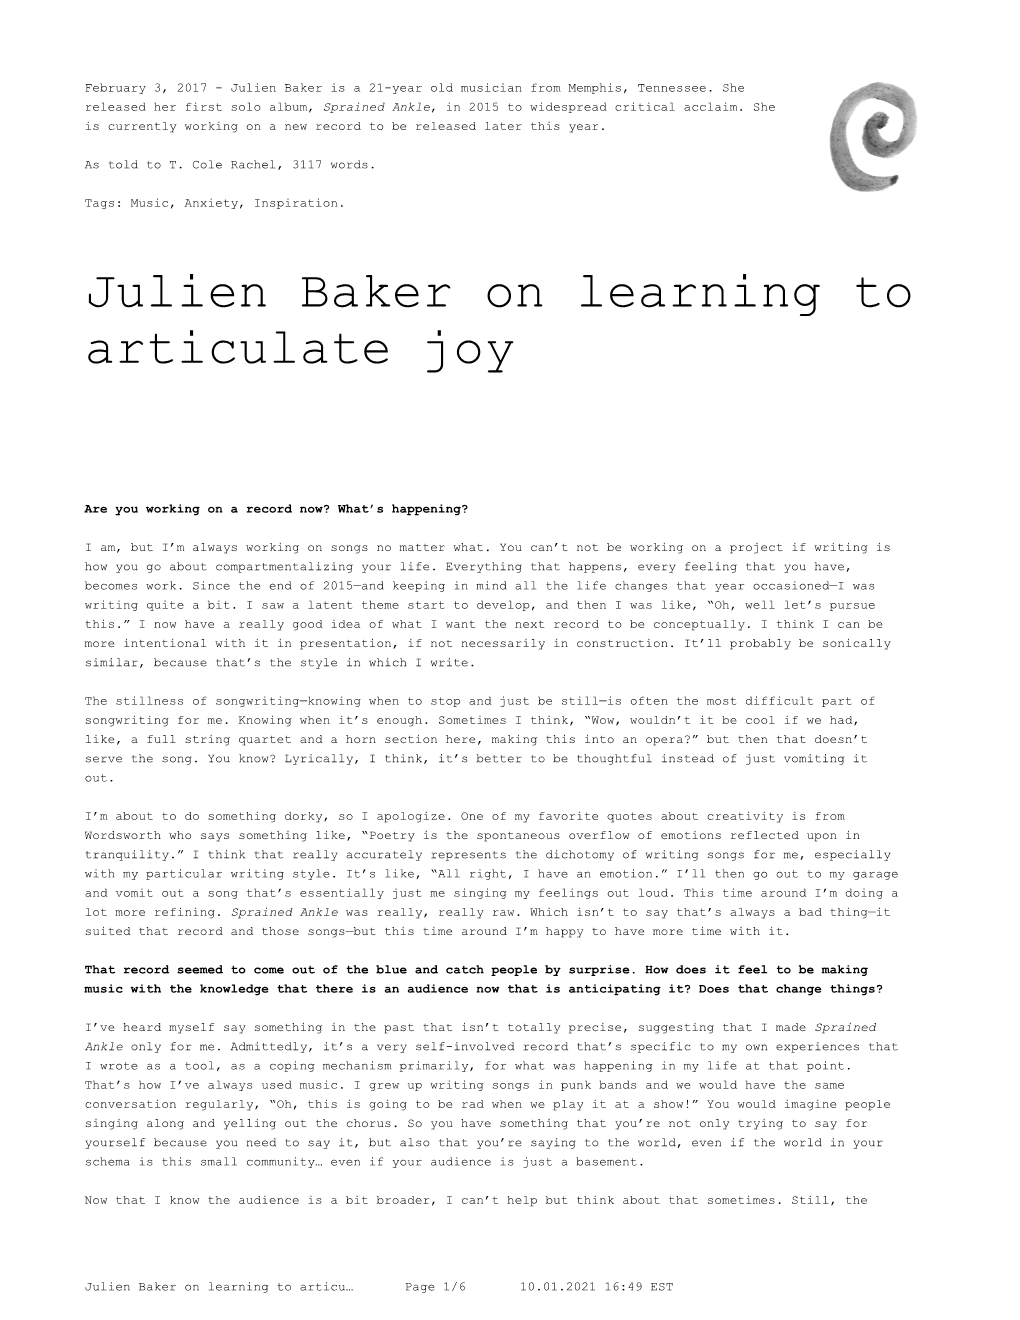 Julien Baker on Learning to Articulate Joy